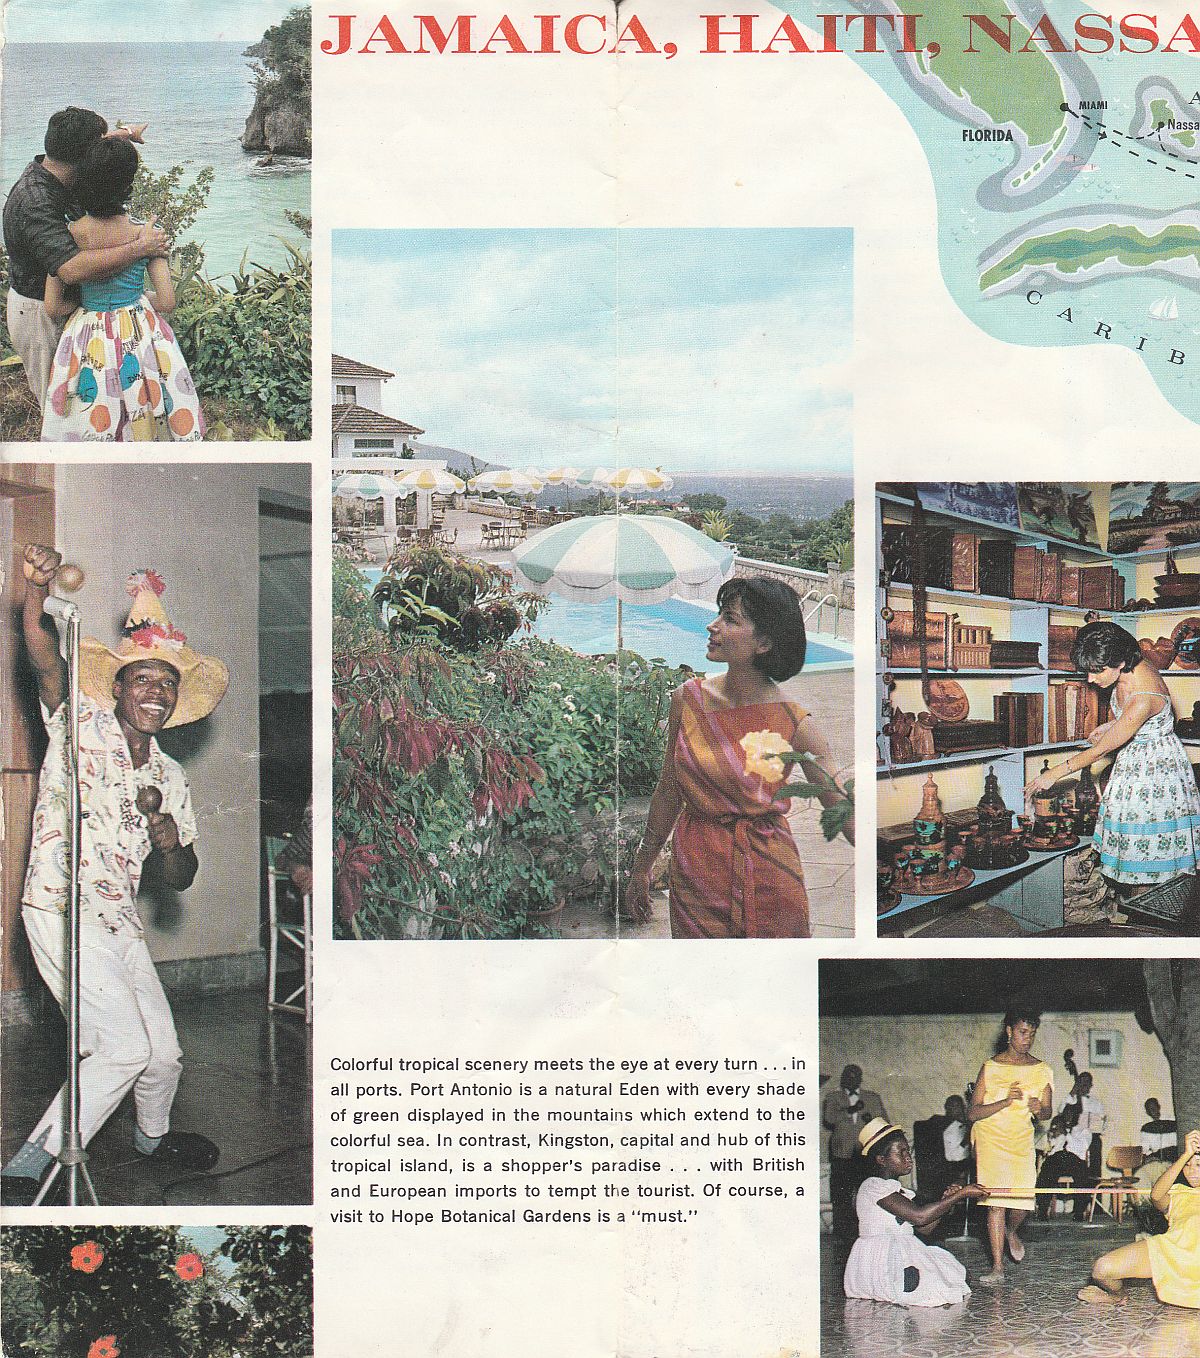 ss Evangeline Itinerary map & Jamaica photos: Jamaica, Haiti, Nassau - a happy combination (left page)